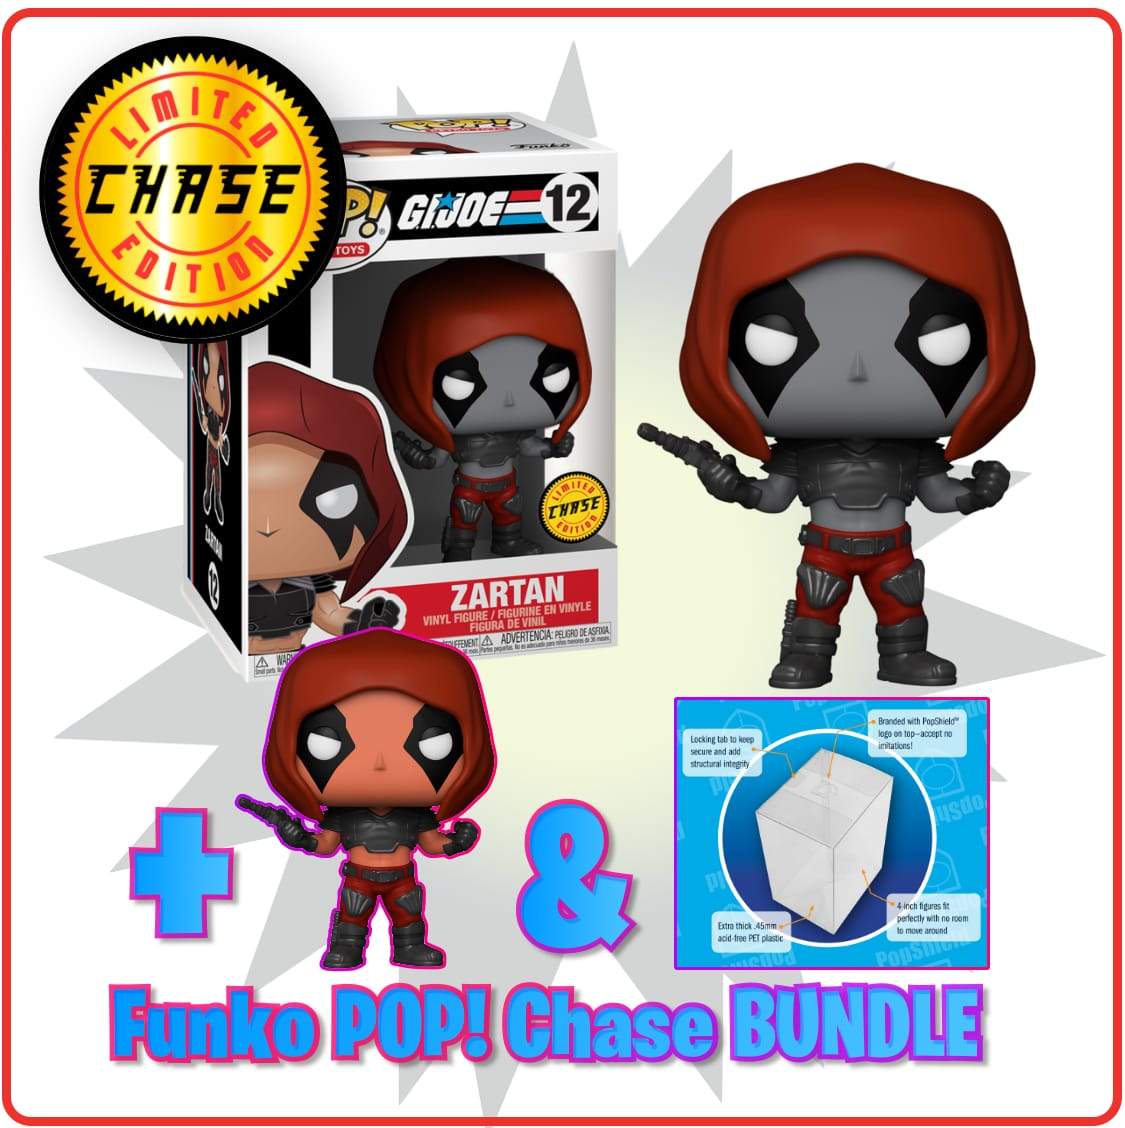 Funko POP! CHASE: G.I. Joe Zartan #12 2 Pack Bundle Pop-O-Loco